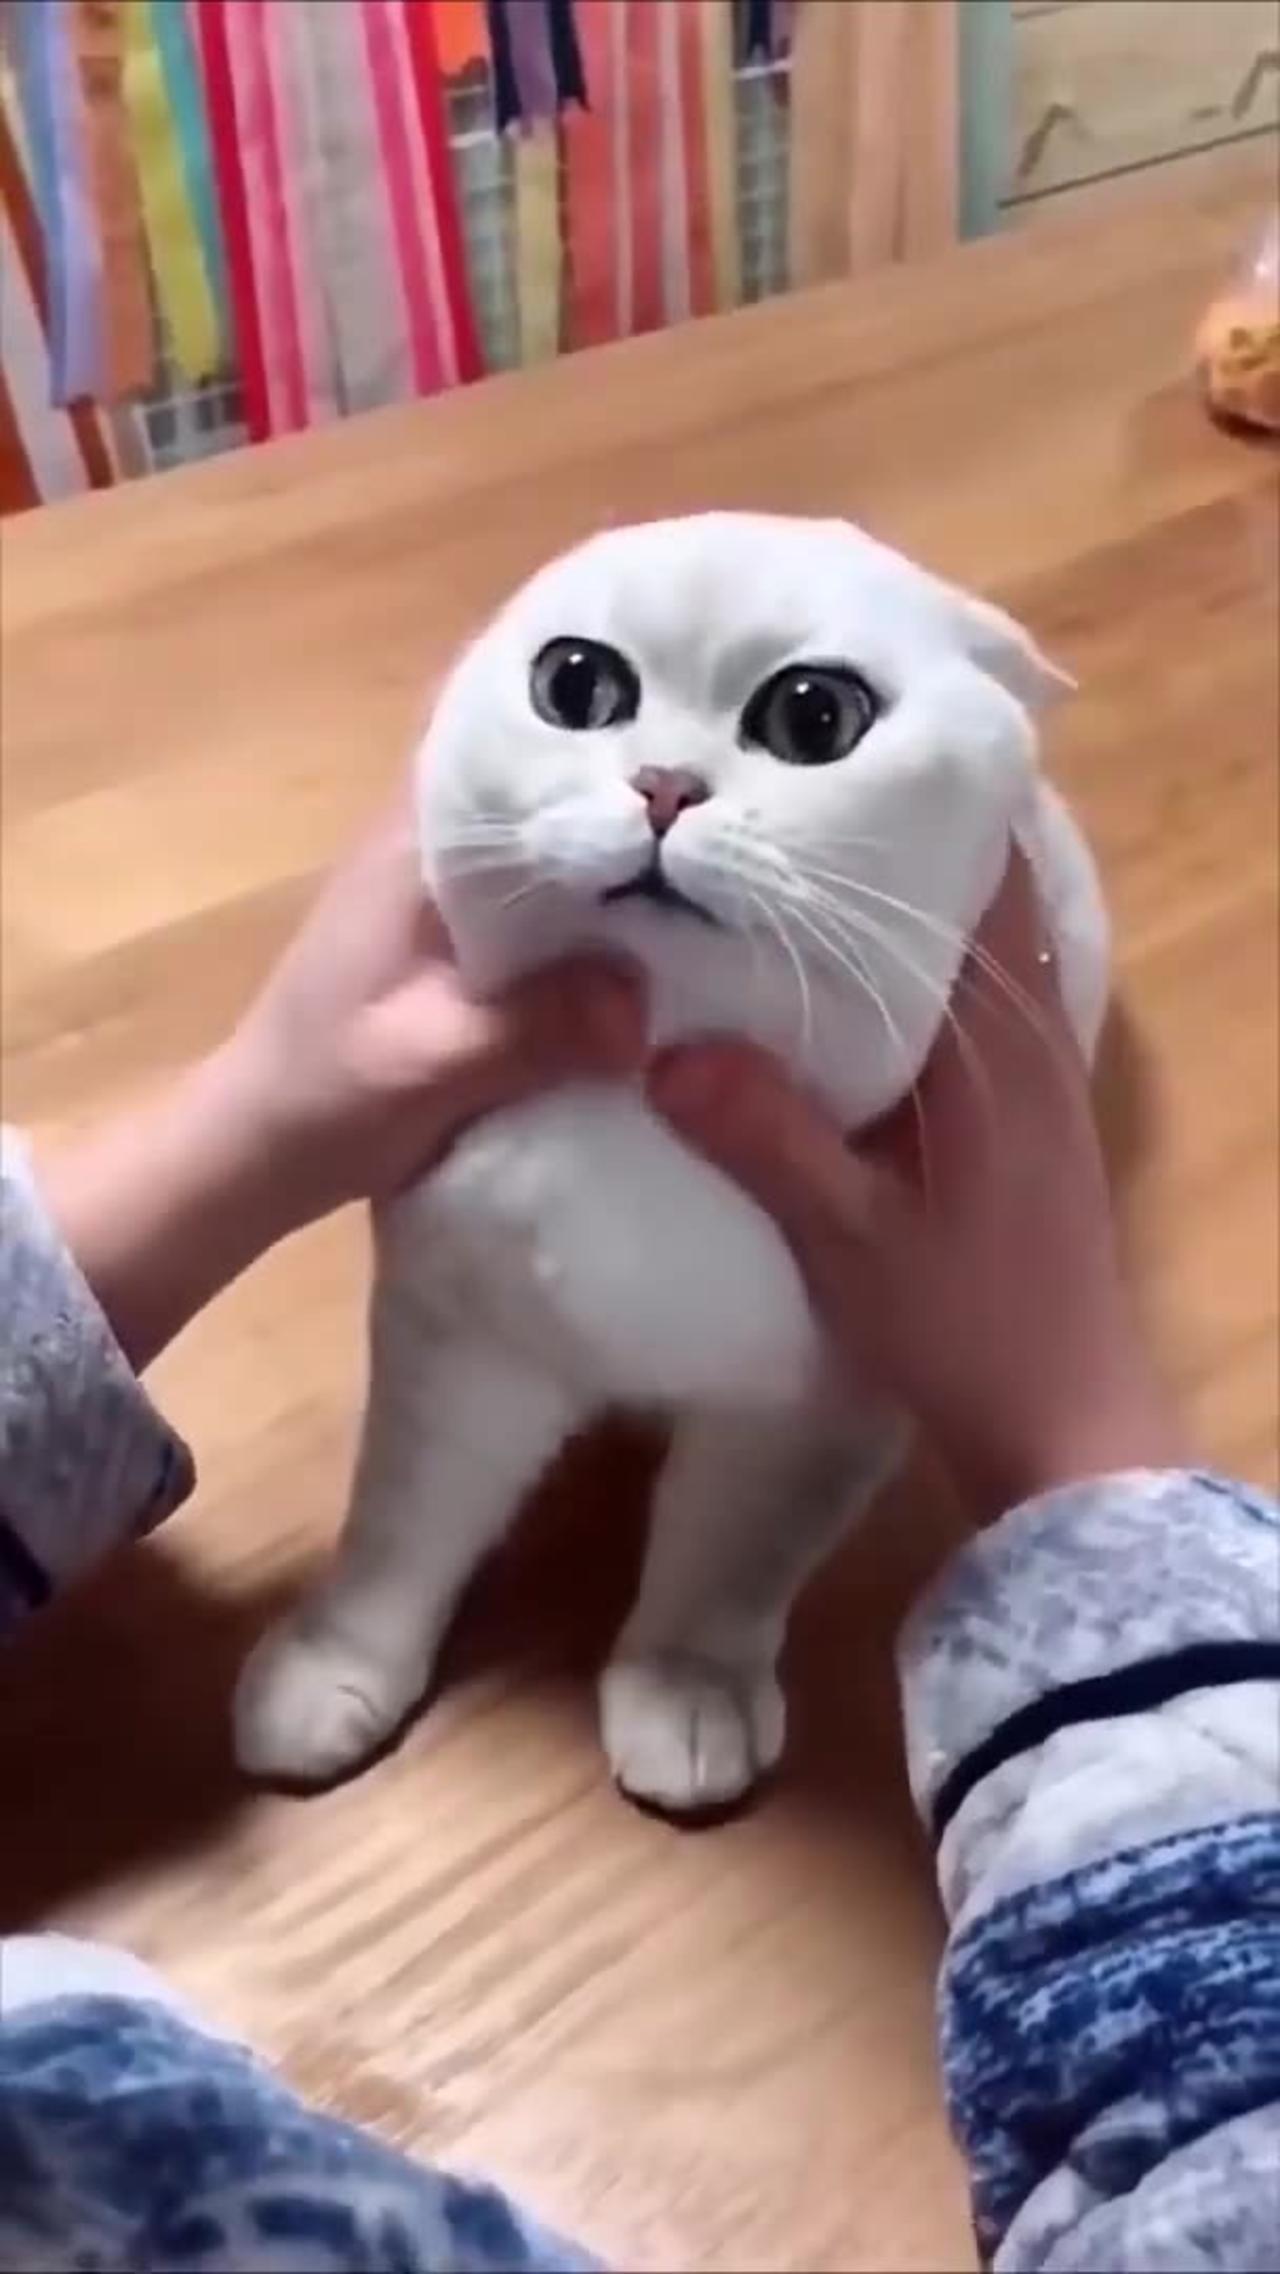 Cute funny cat videos